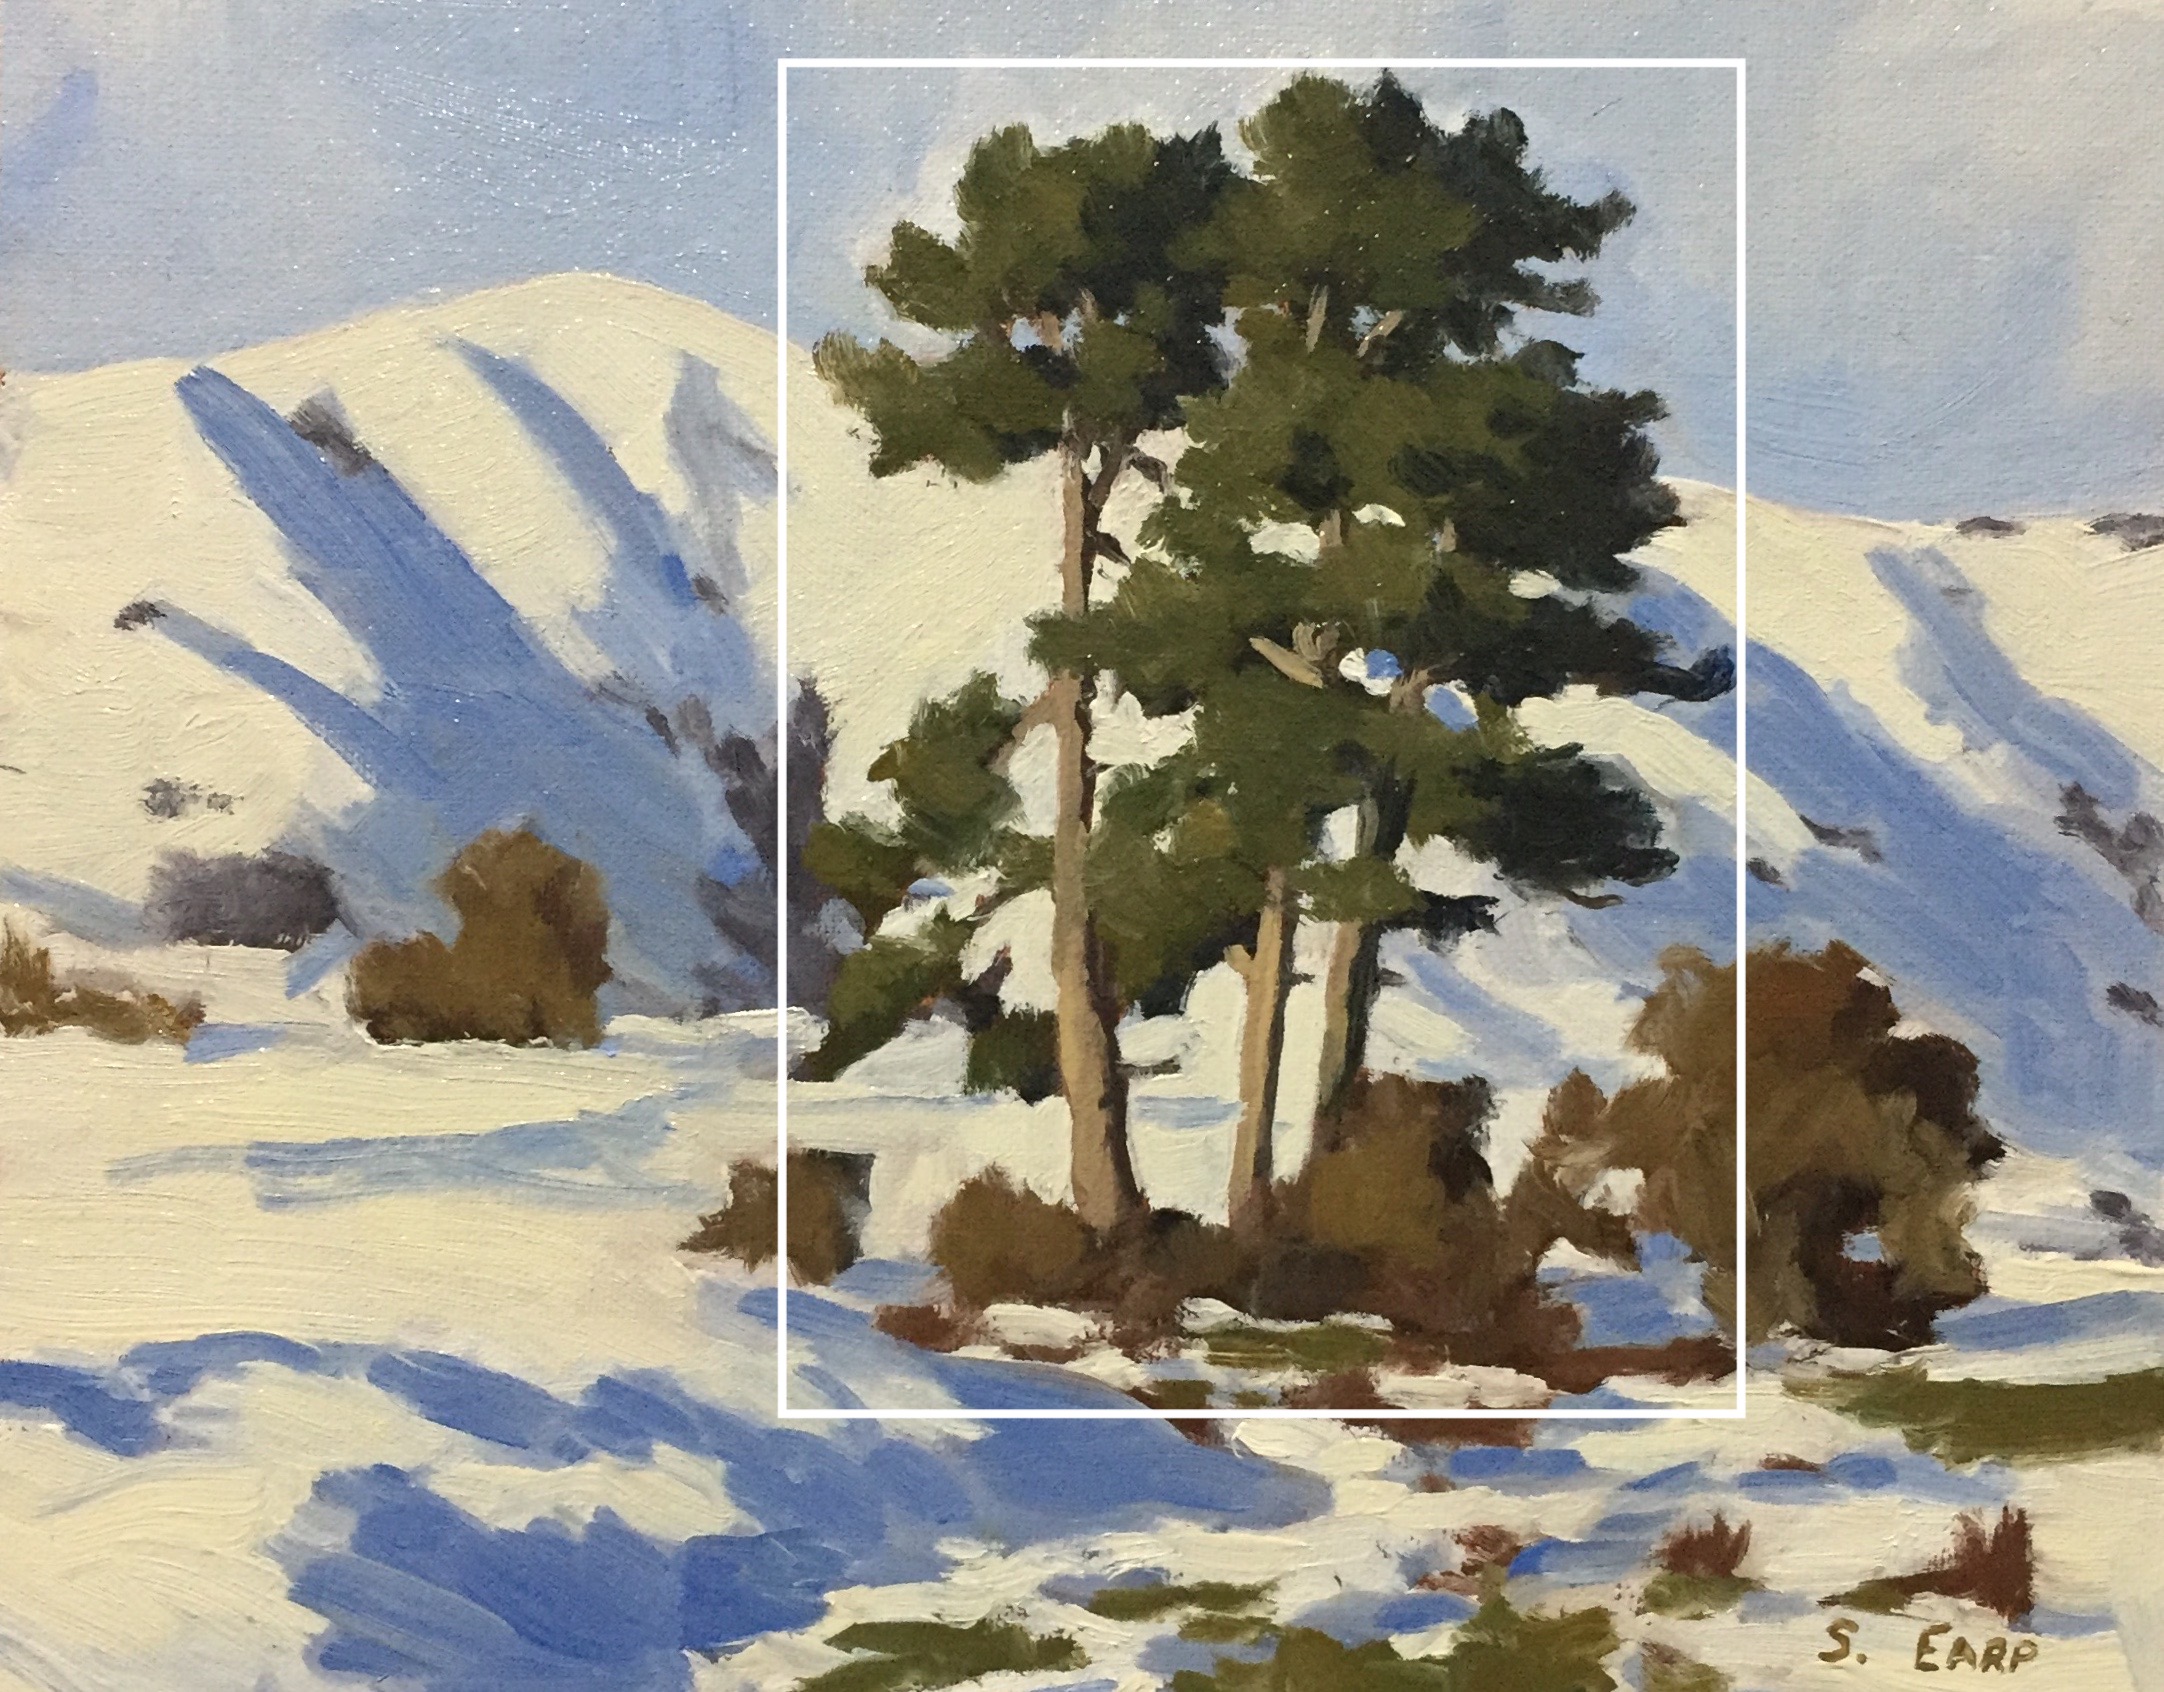 Pine Trees - Tobins Track - Samuel Earp - plein air copy.jpg